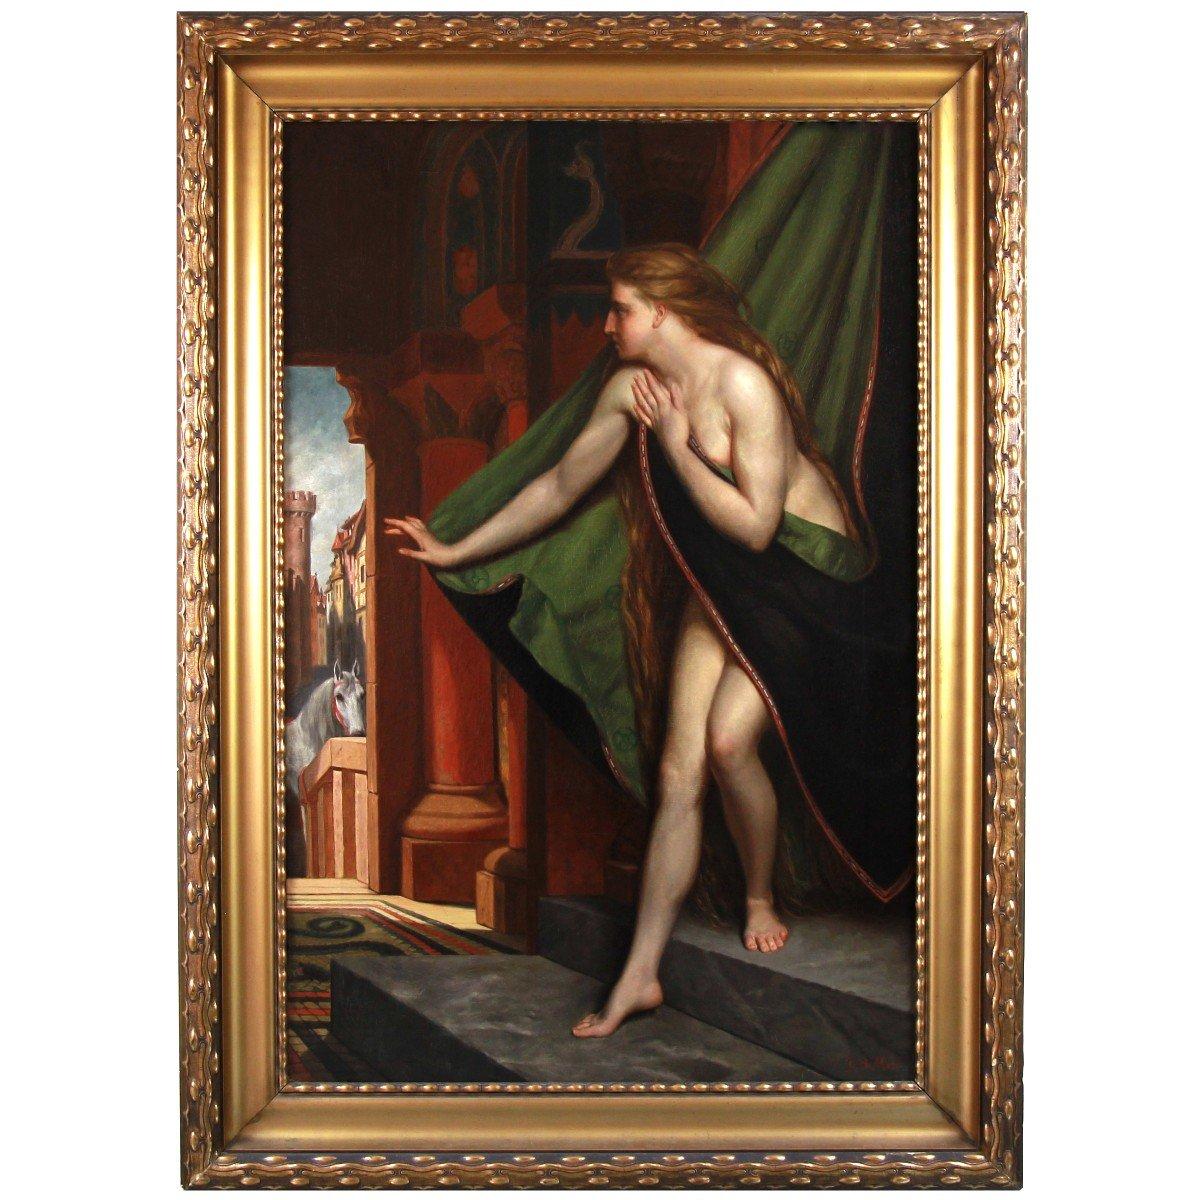  JH Mols Figurative Painting - Oil on canvas nude " Lady Godiva " late 19th century Flemish school